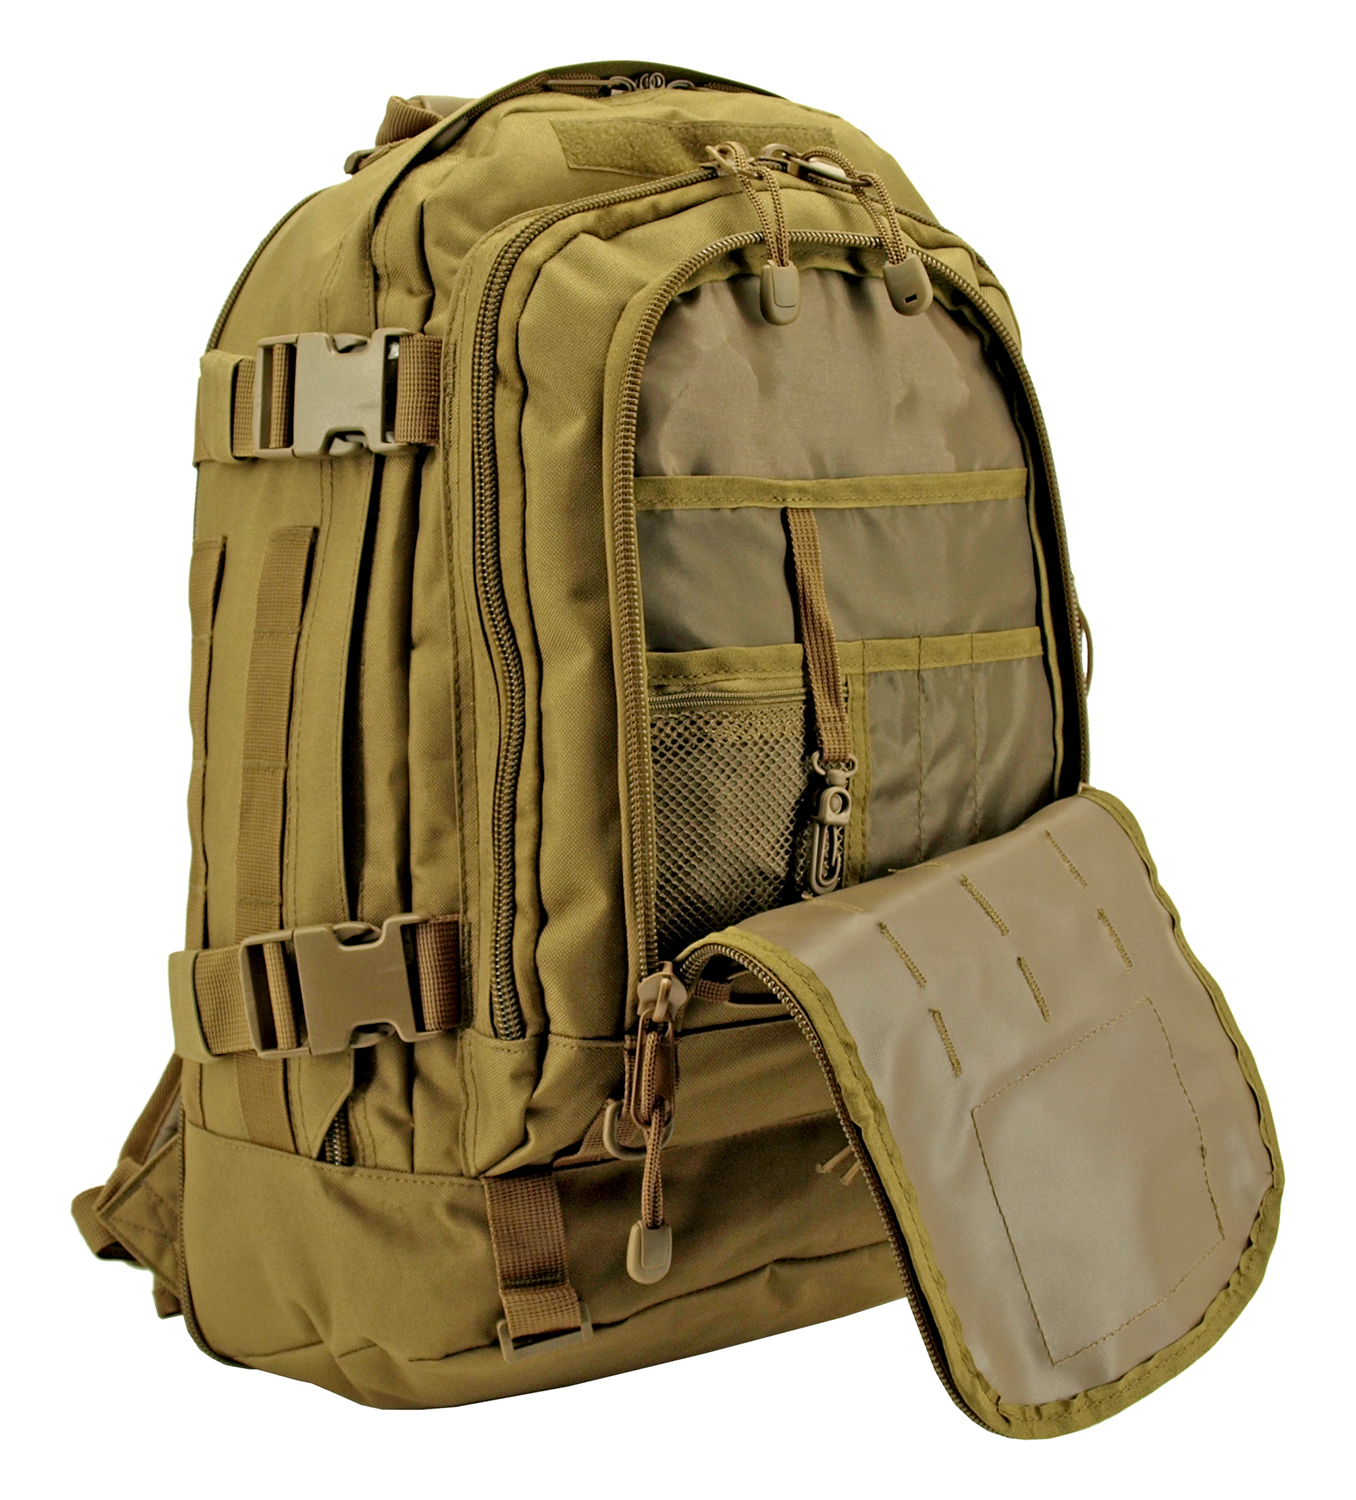 Expandable Tactical Elite Backpack - Desert Tan